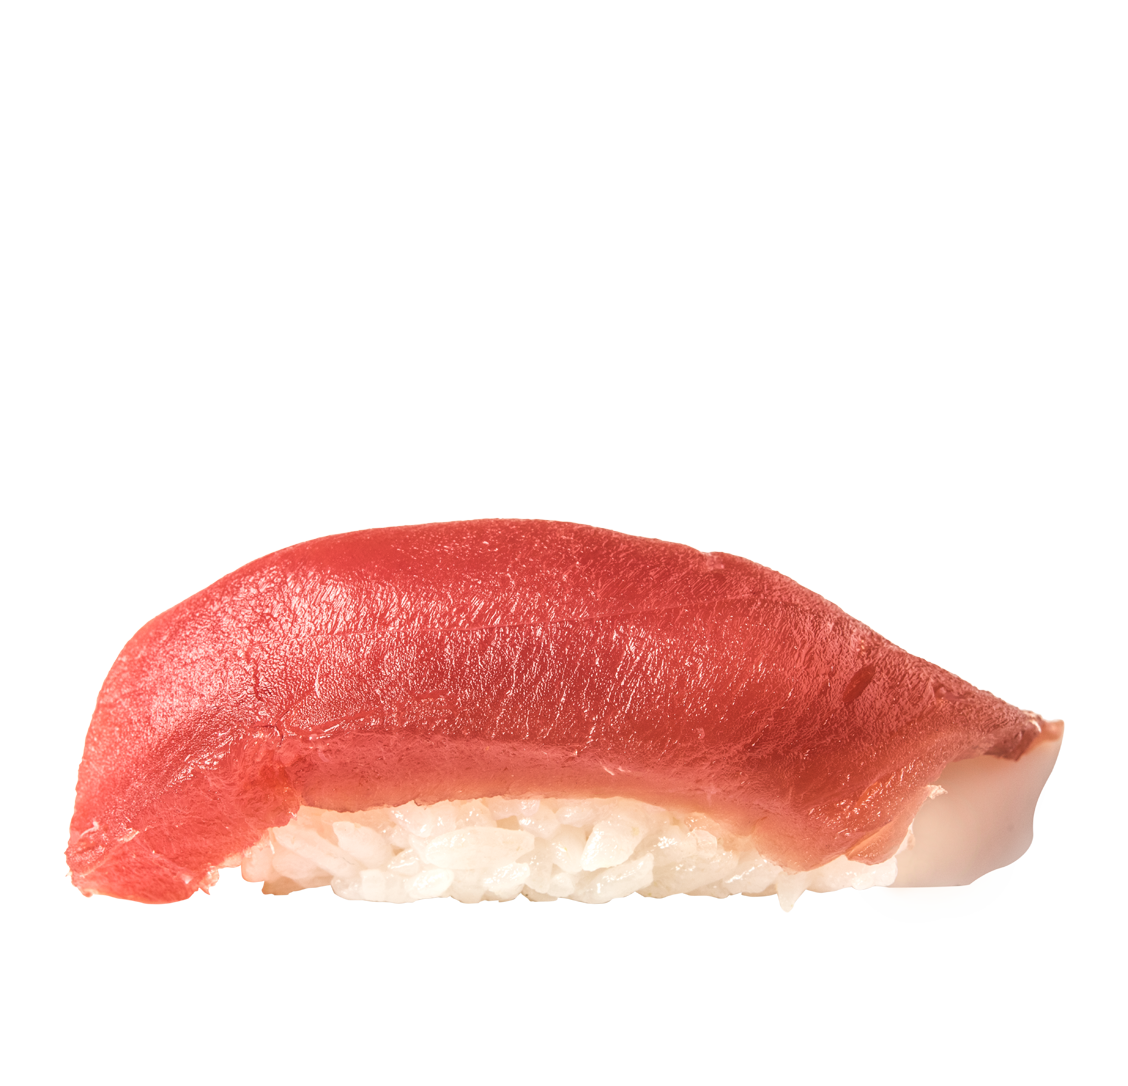 Tuna </br>2,80 € title=Tuna </br>2,80 €